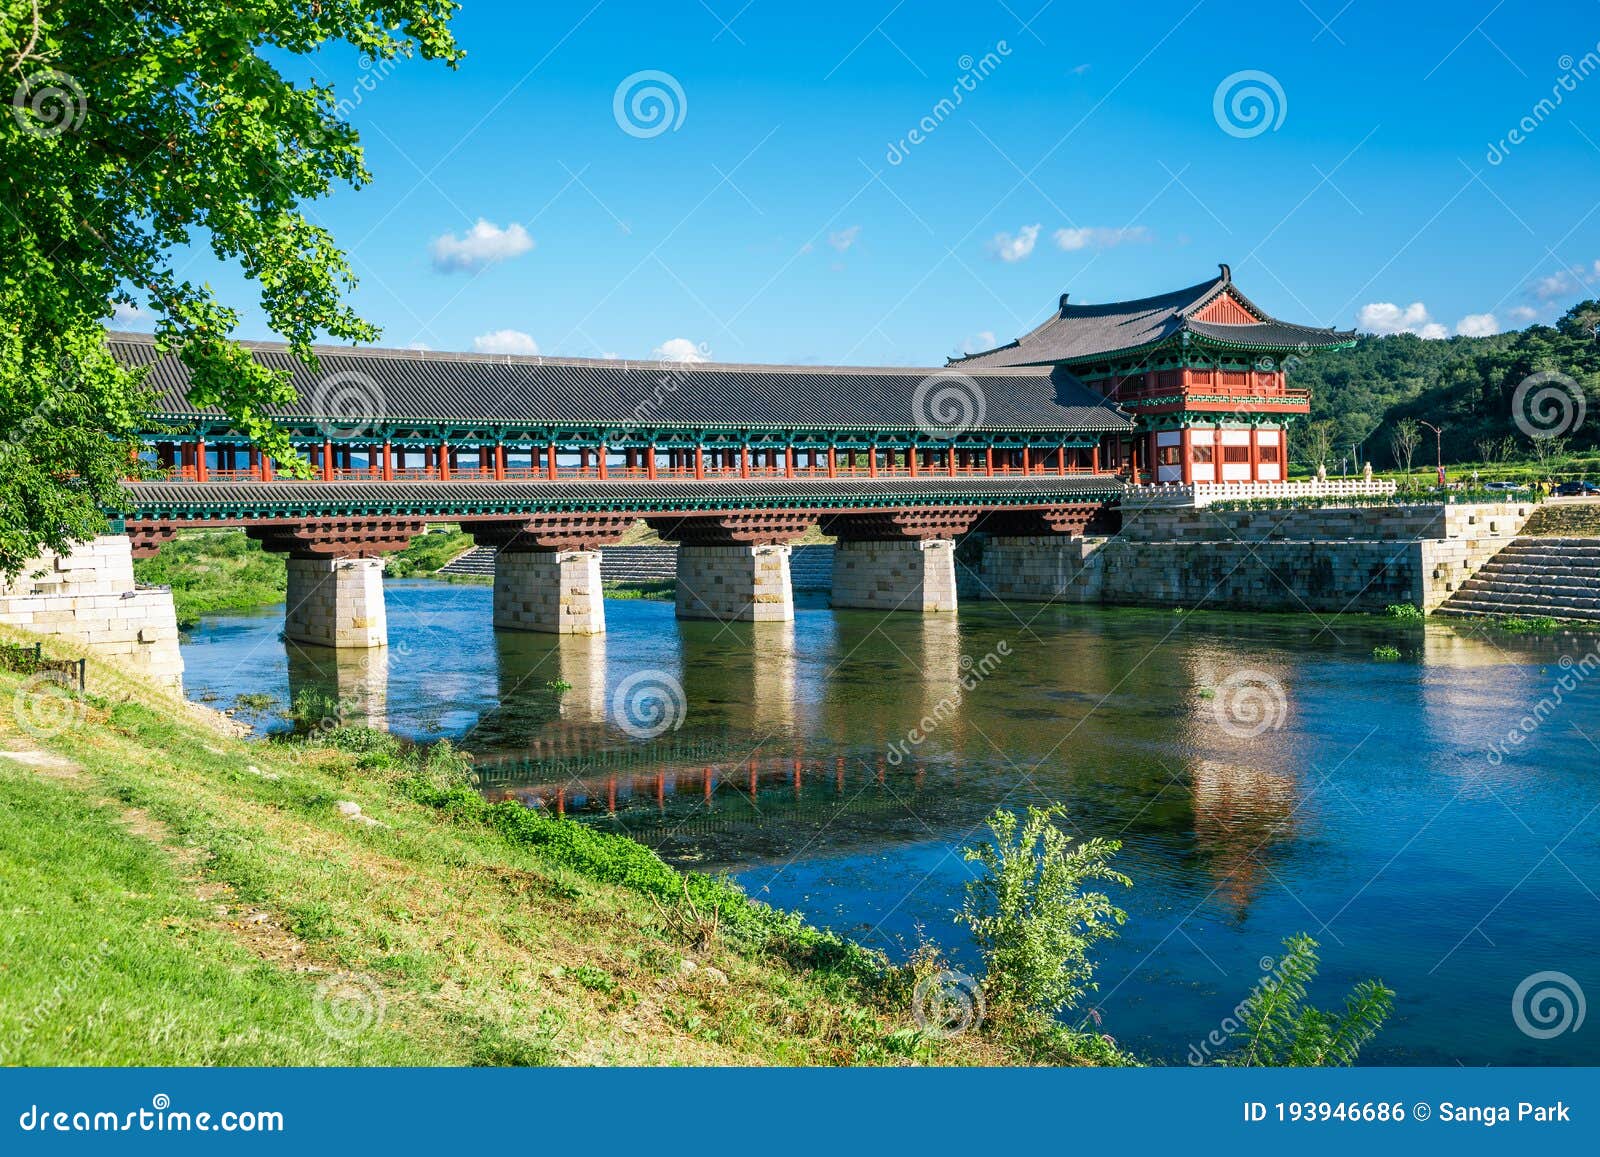 woljeong korean traditional bridge on river in gyeongju, korea